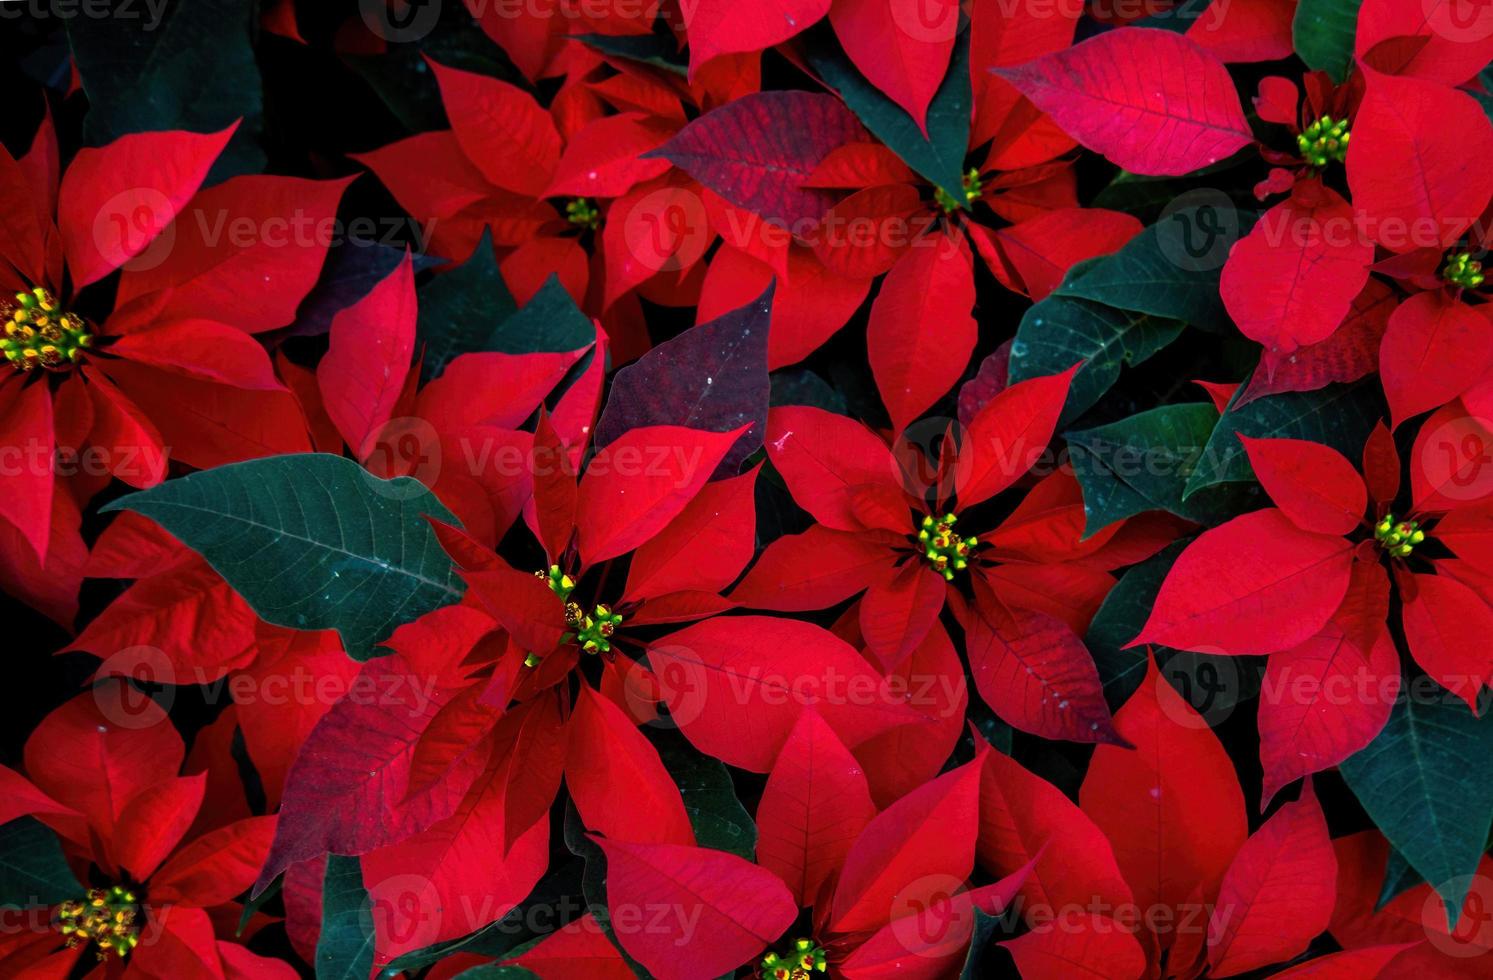 un arreglo de hermosas poinsettias - poinsettia roja o flor de estrella de navidad foto